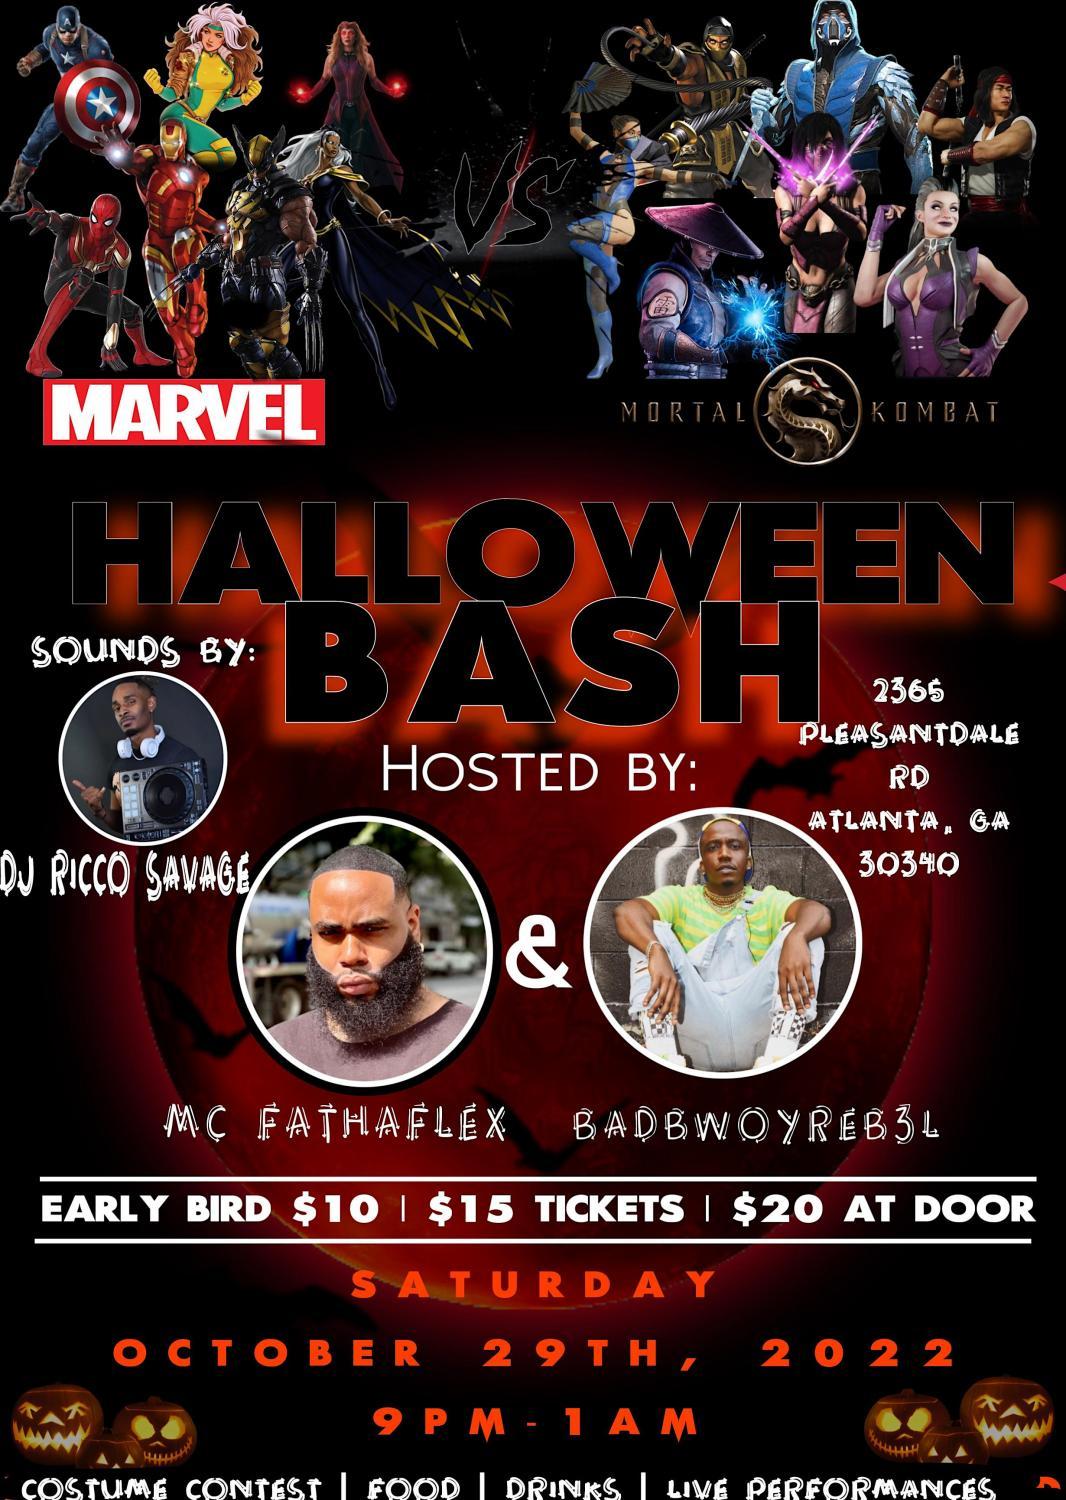 Marvel vs Mortal Kombat Halloween Bash
Sat Oct 29, 8:30 PM - Sun Oct 30, 12:00 AM
in 12 days